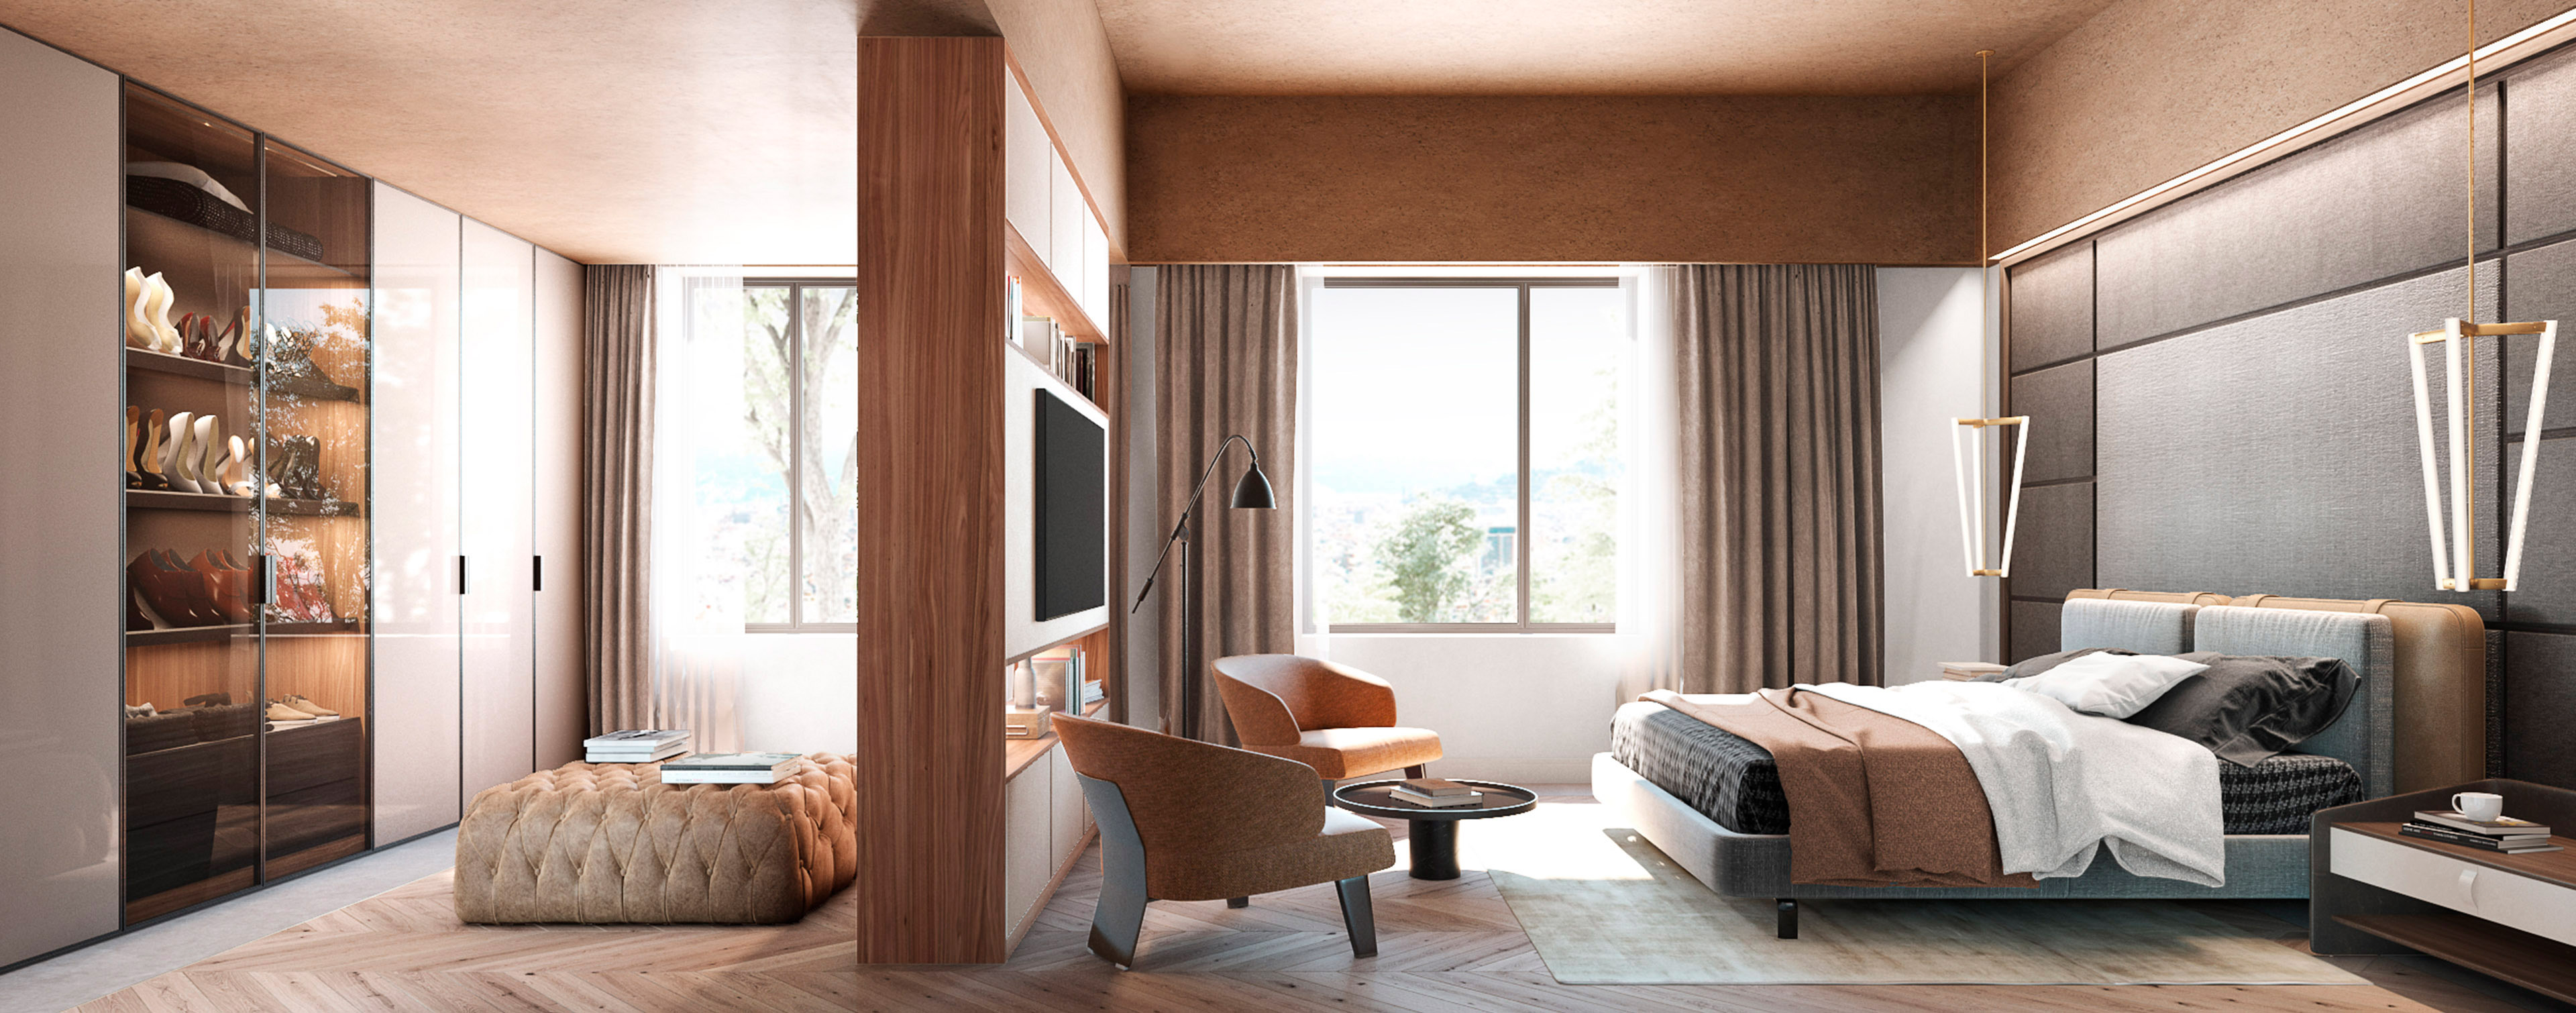 luv studio luxury architects barcelona pedralbes spc house IMG 02 - PEDRALBES SPC-HOUSE